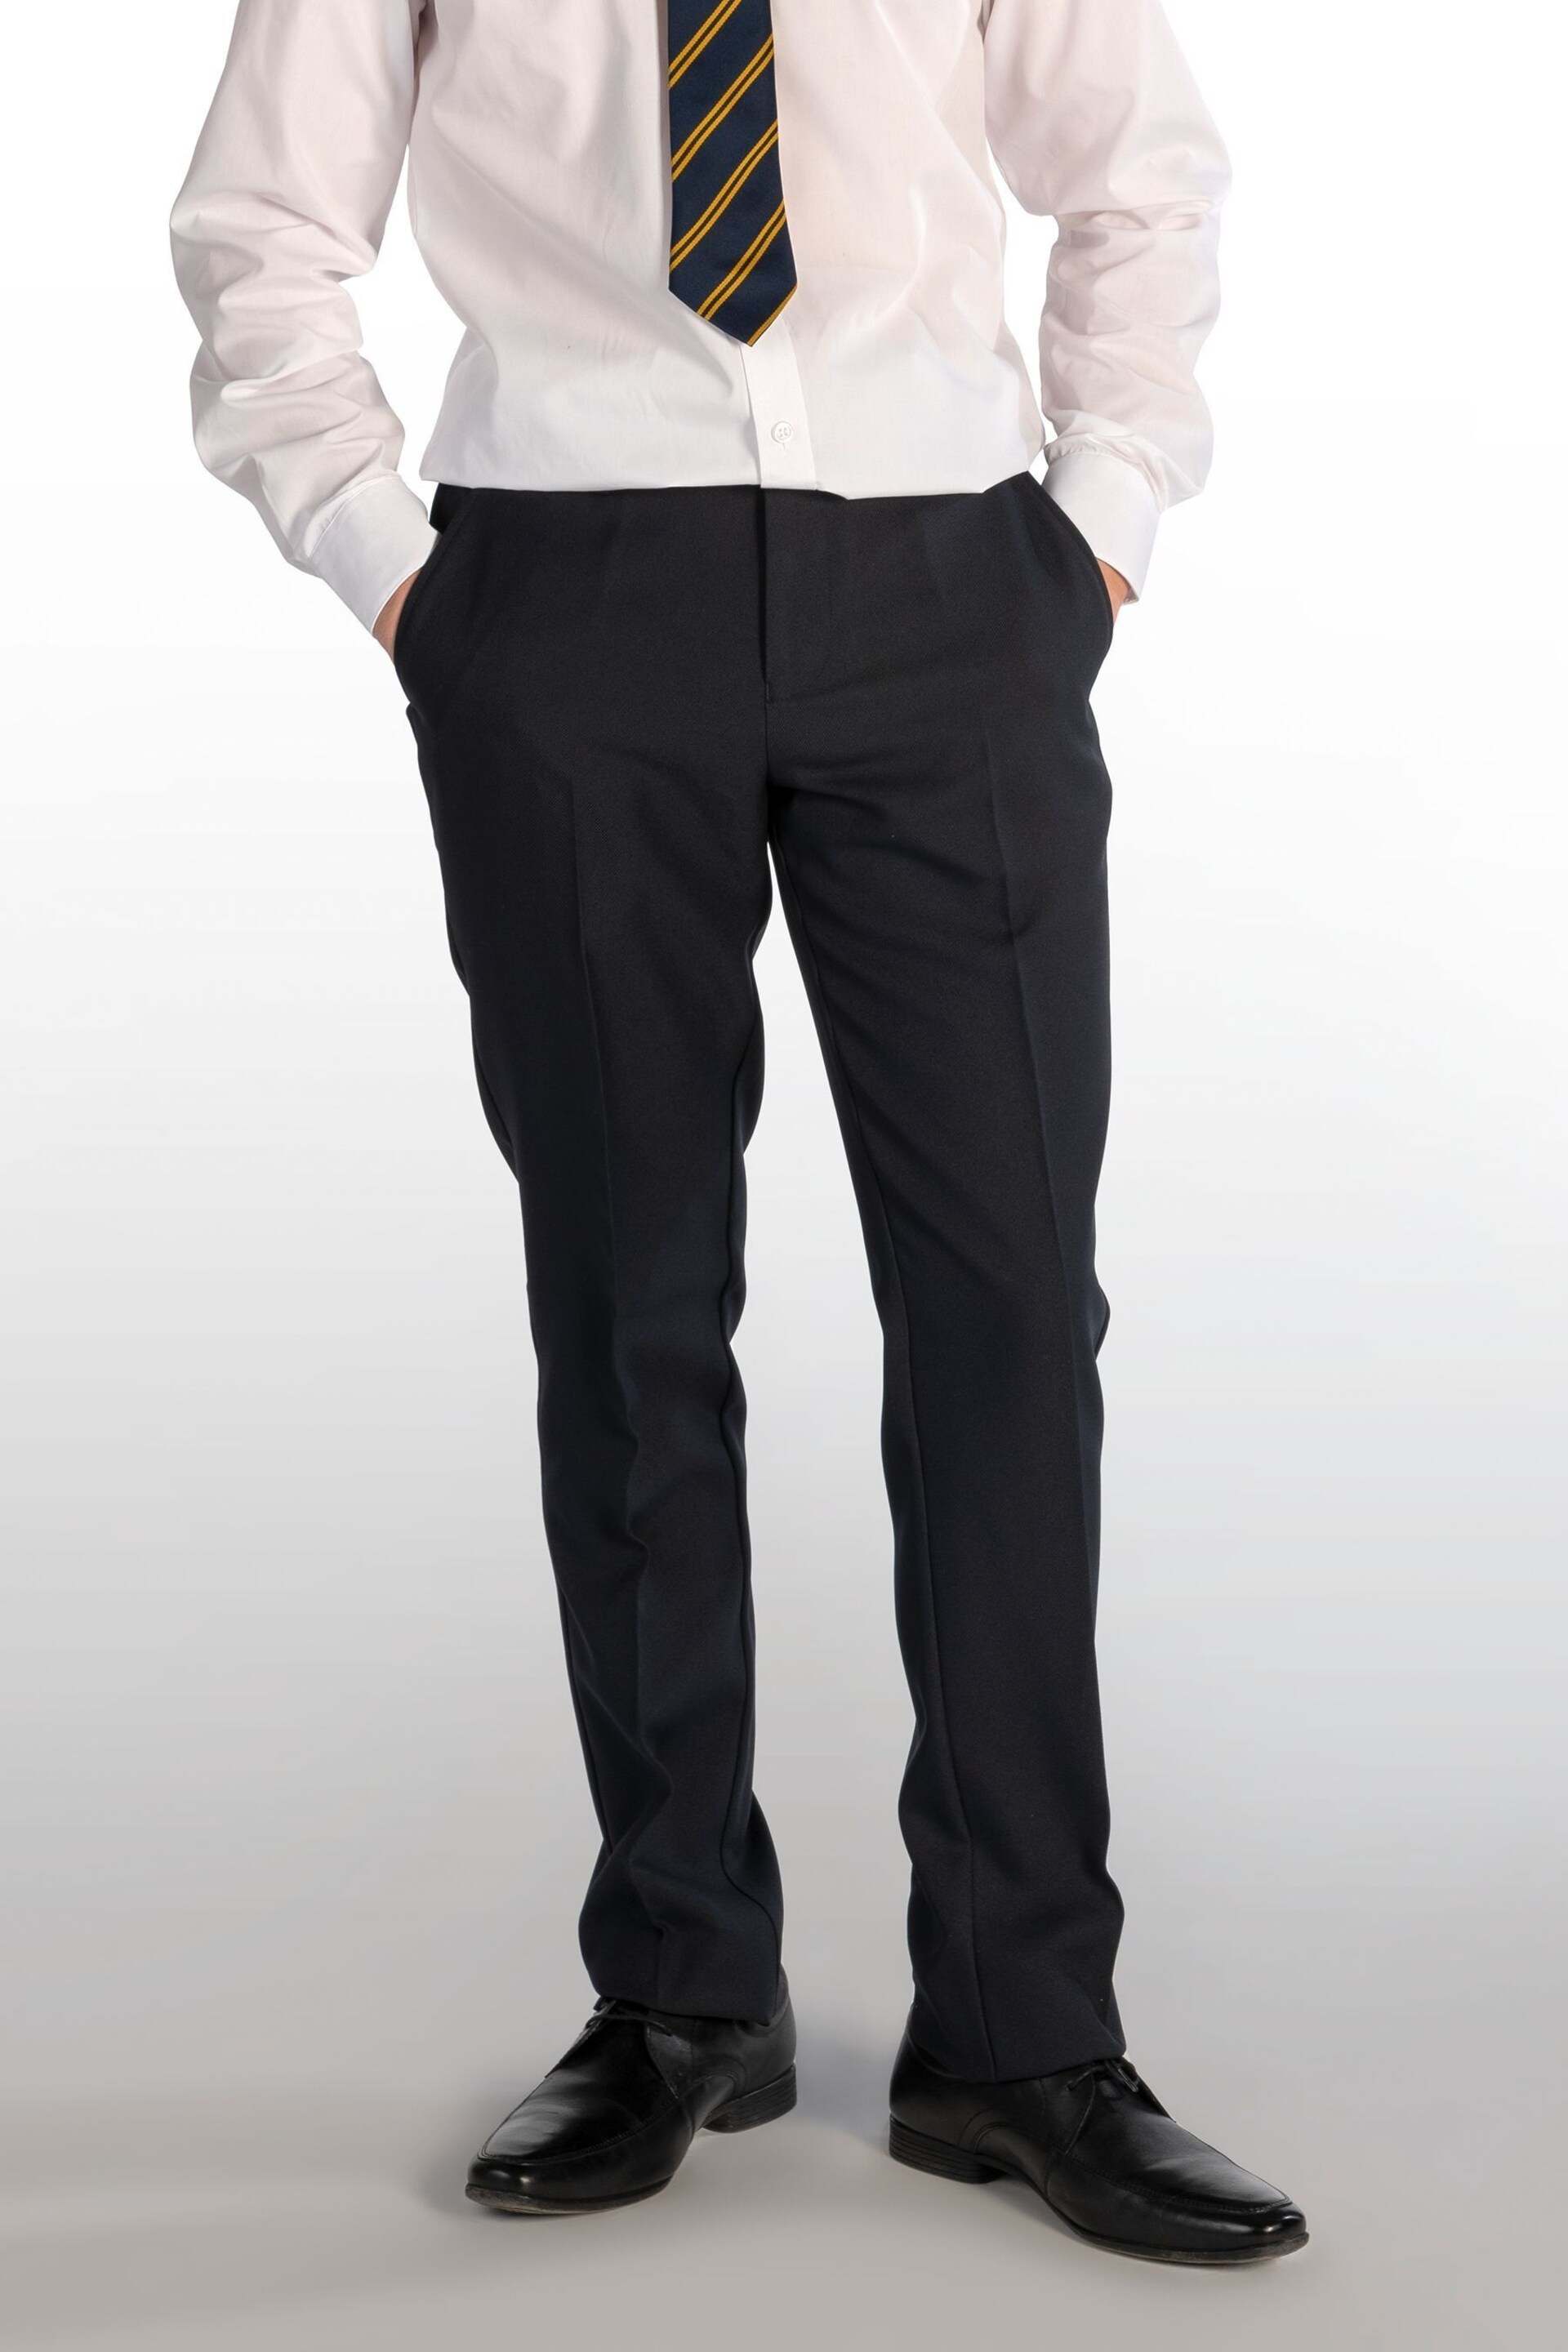 Trutex Senior Boys Grey Slim Leg School Trousers - Image 1 of 3